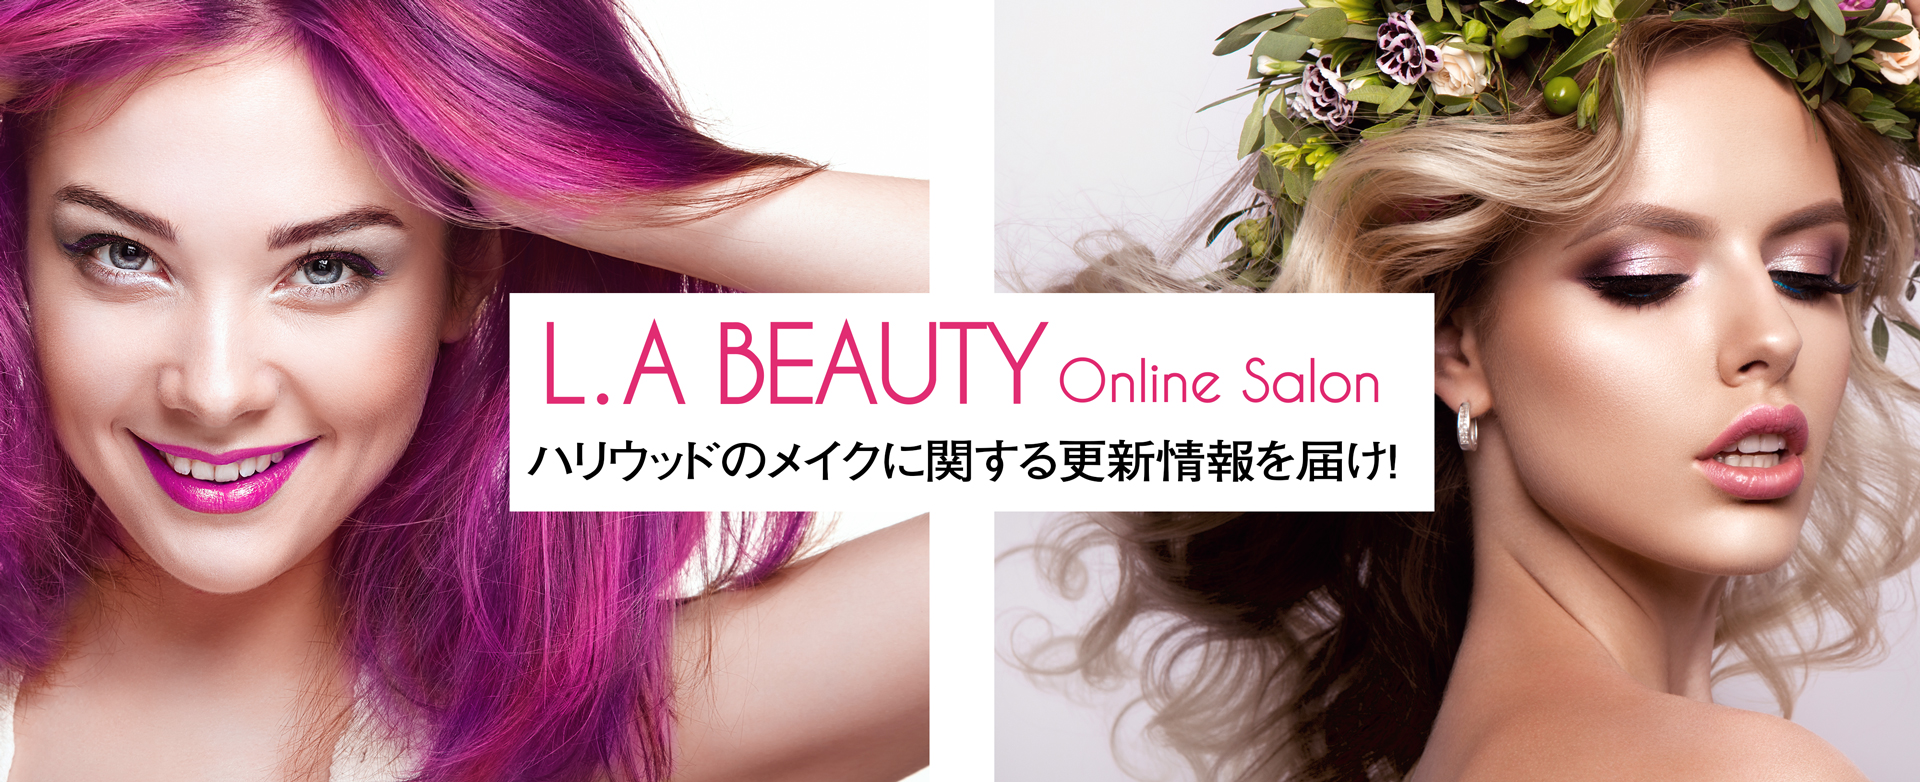 L.A Beauty Online Salon3 バナー